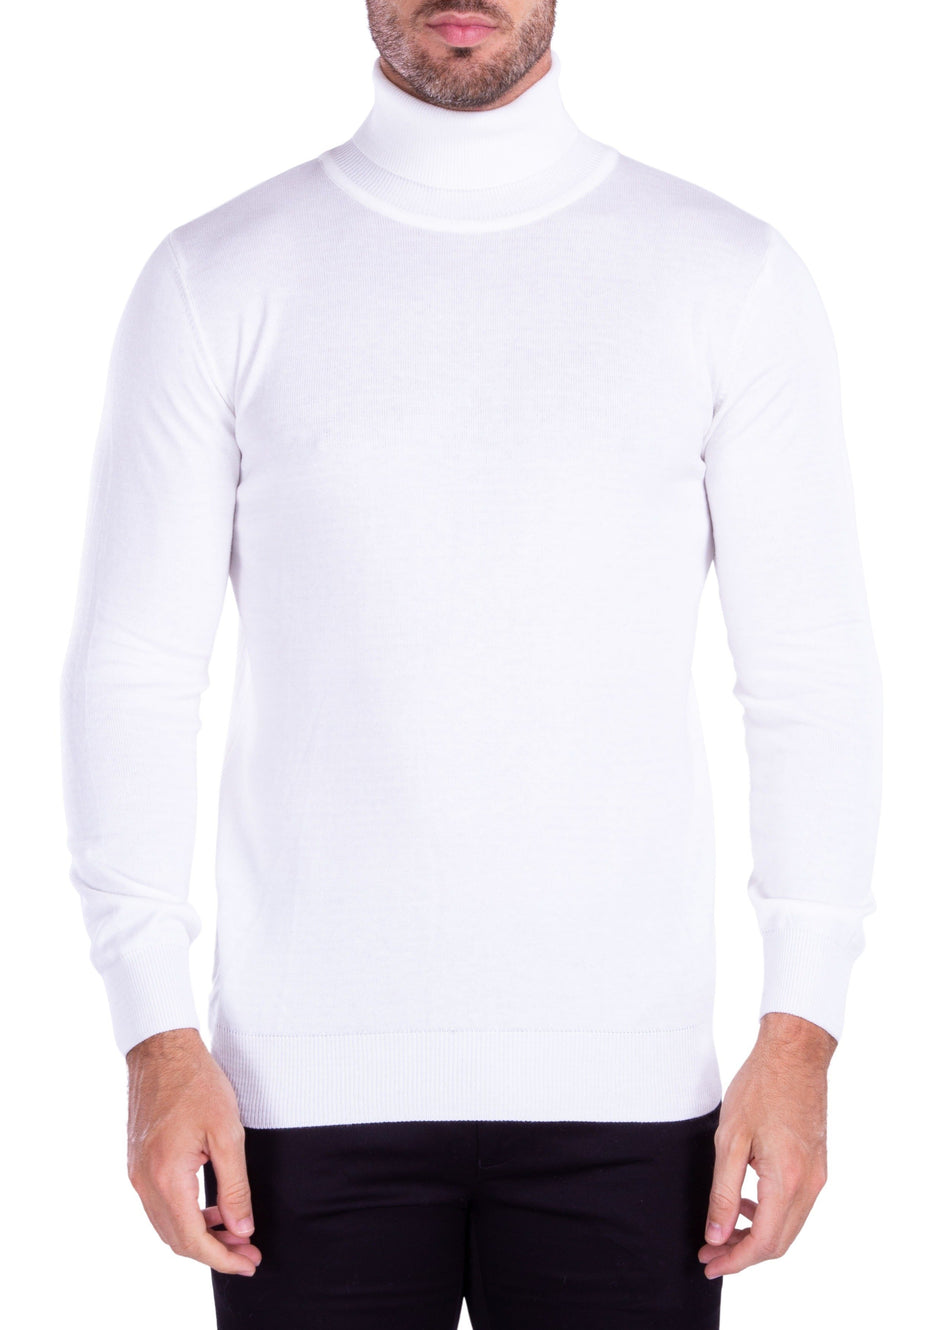 215100 - White Turtleneck Sweater